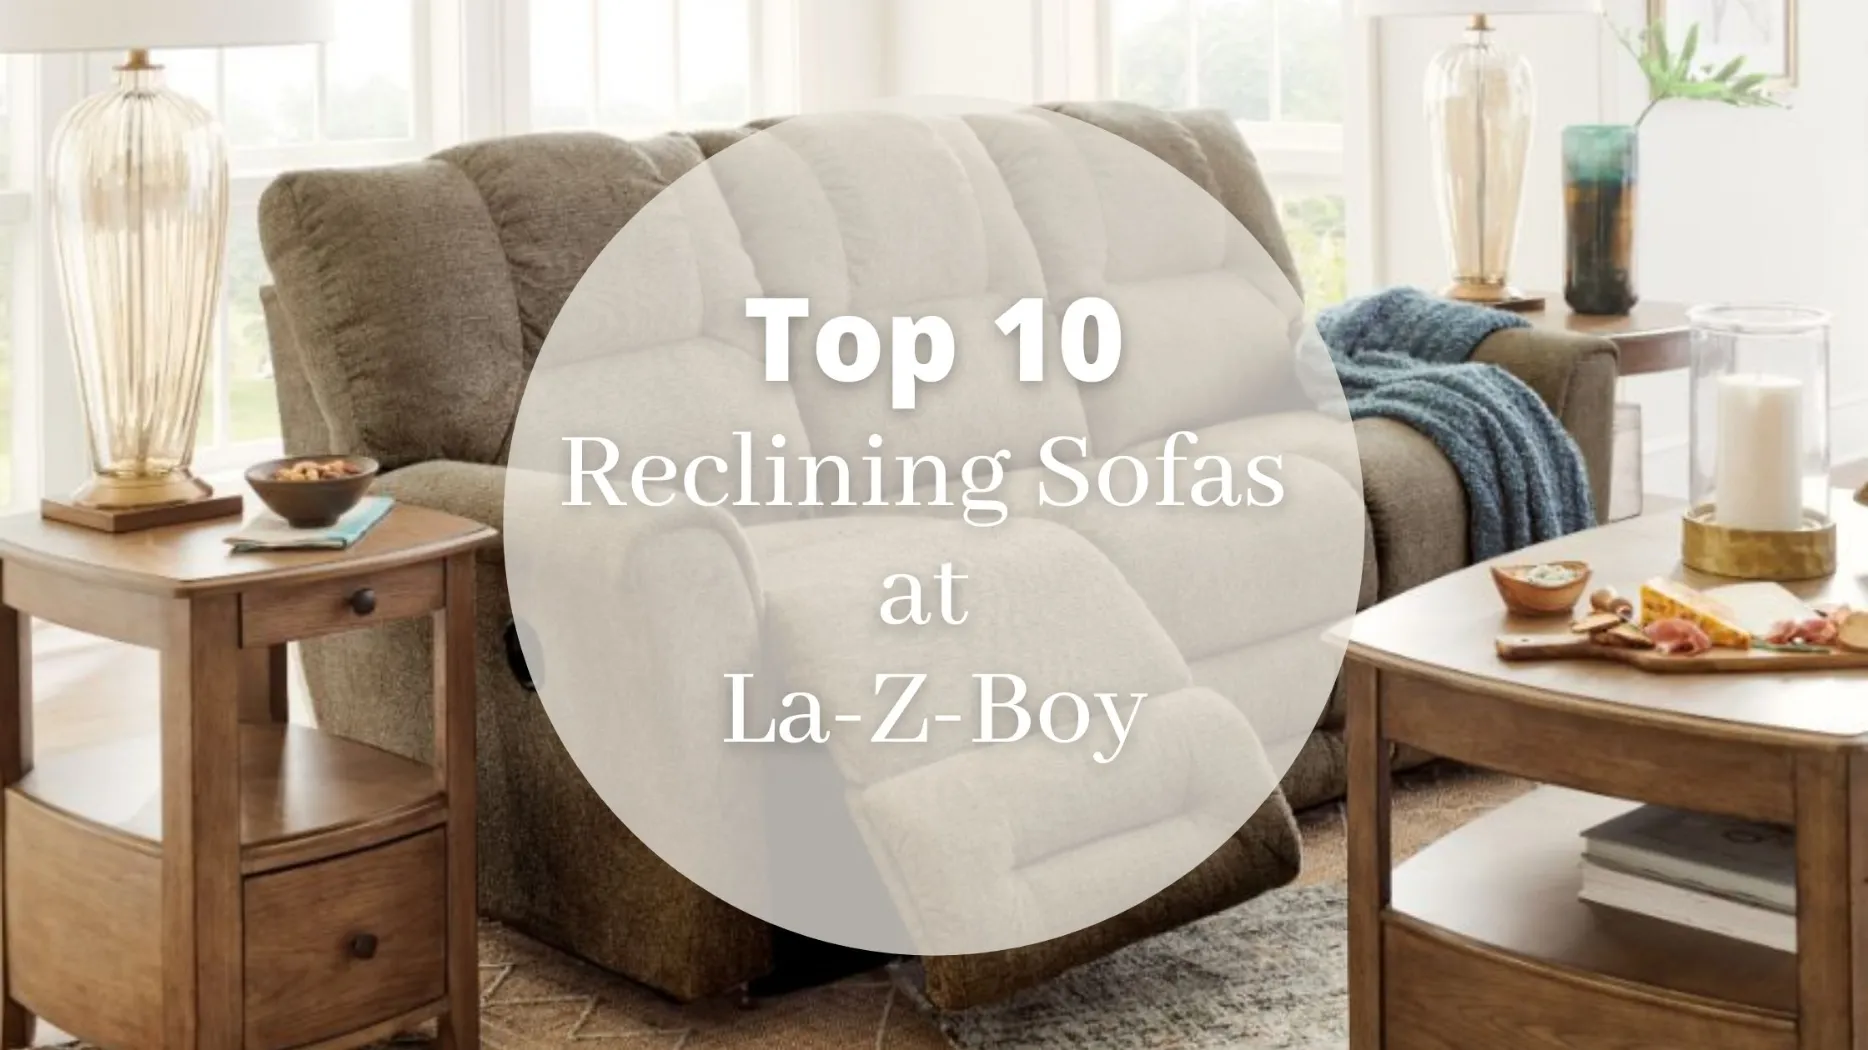 Top reclining Sofas at La-Z-Boy